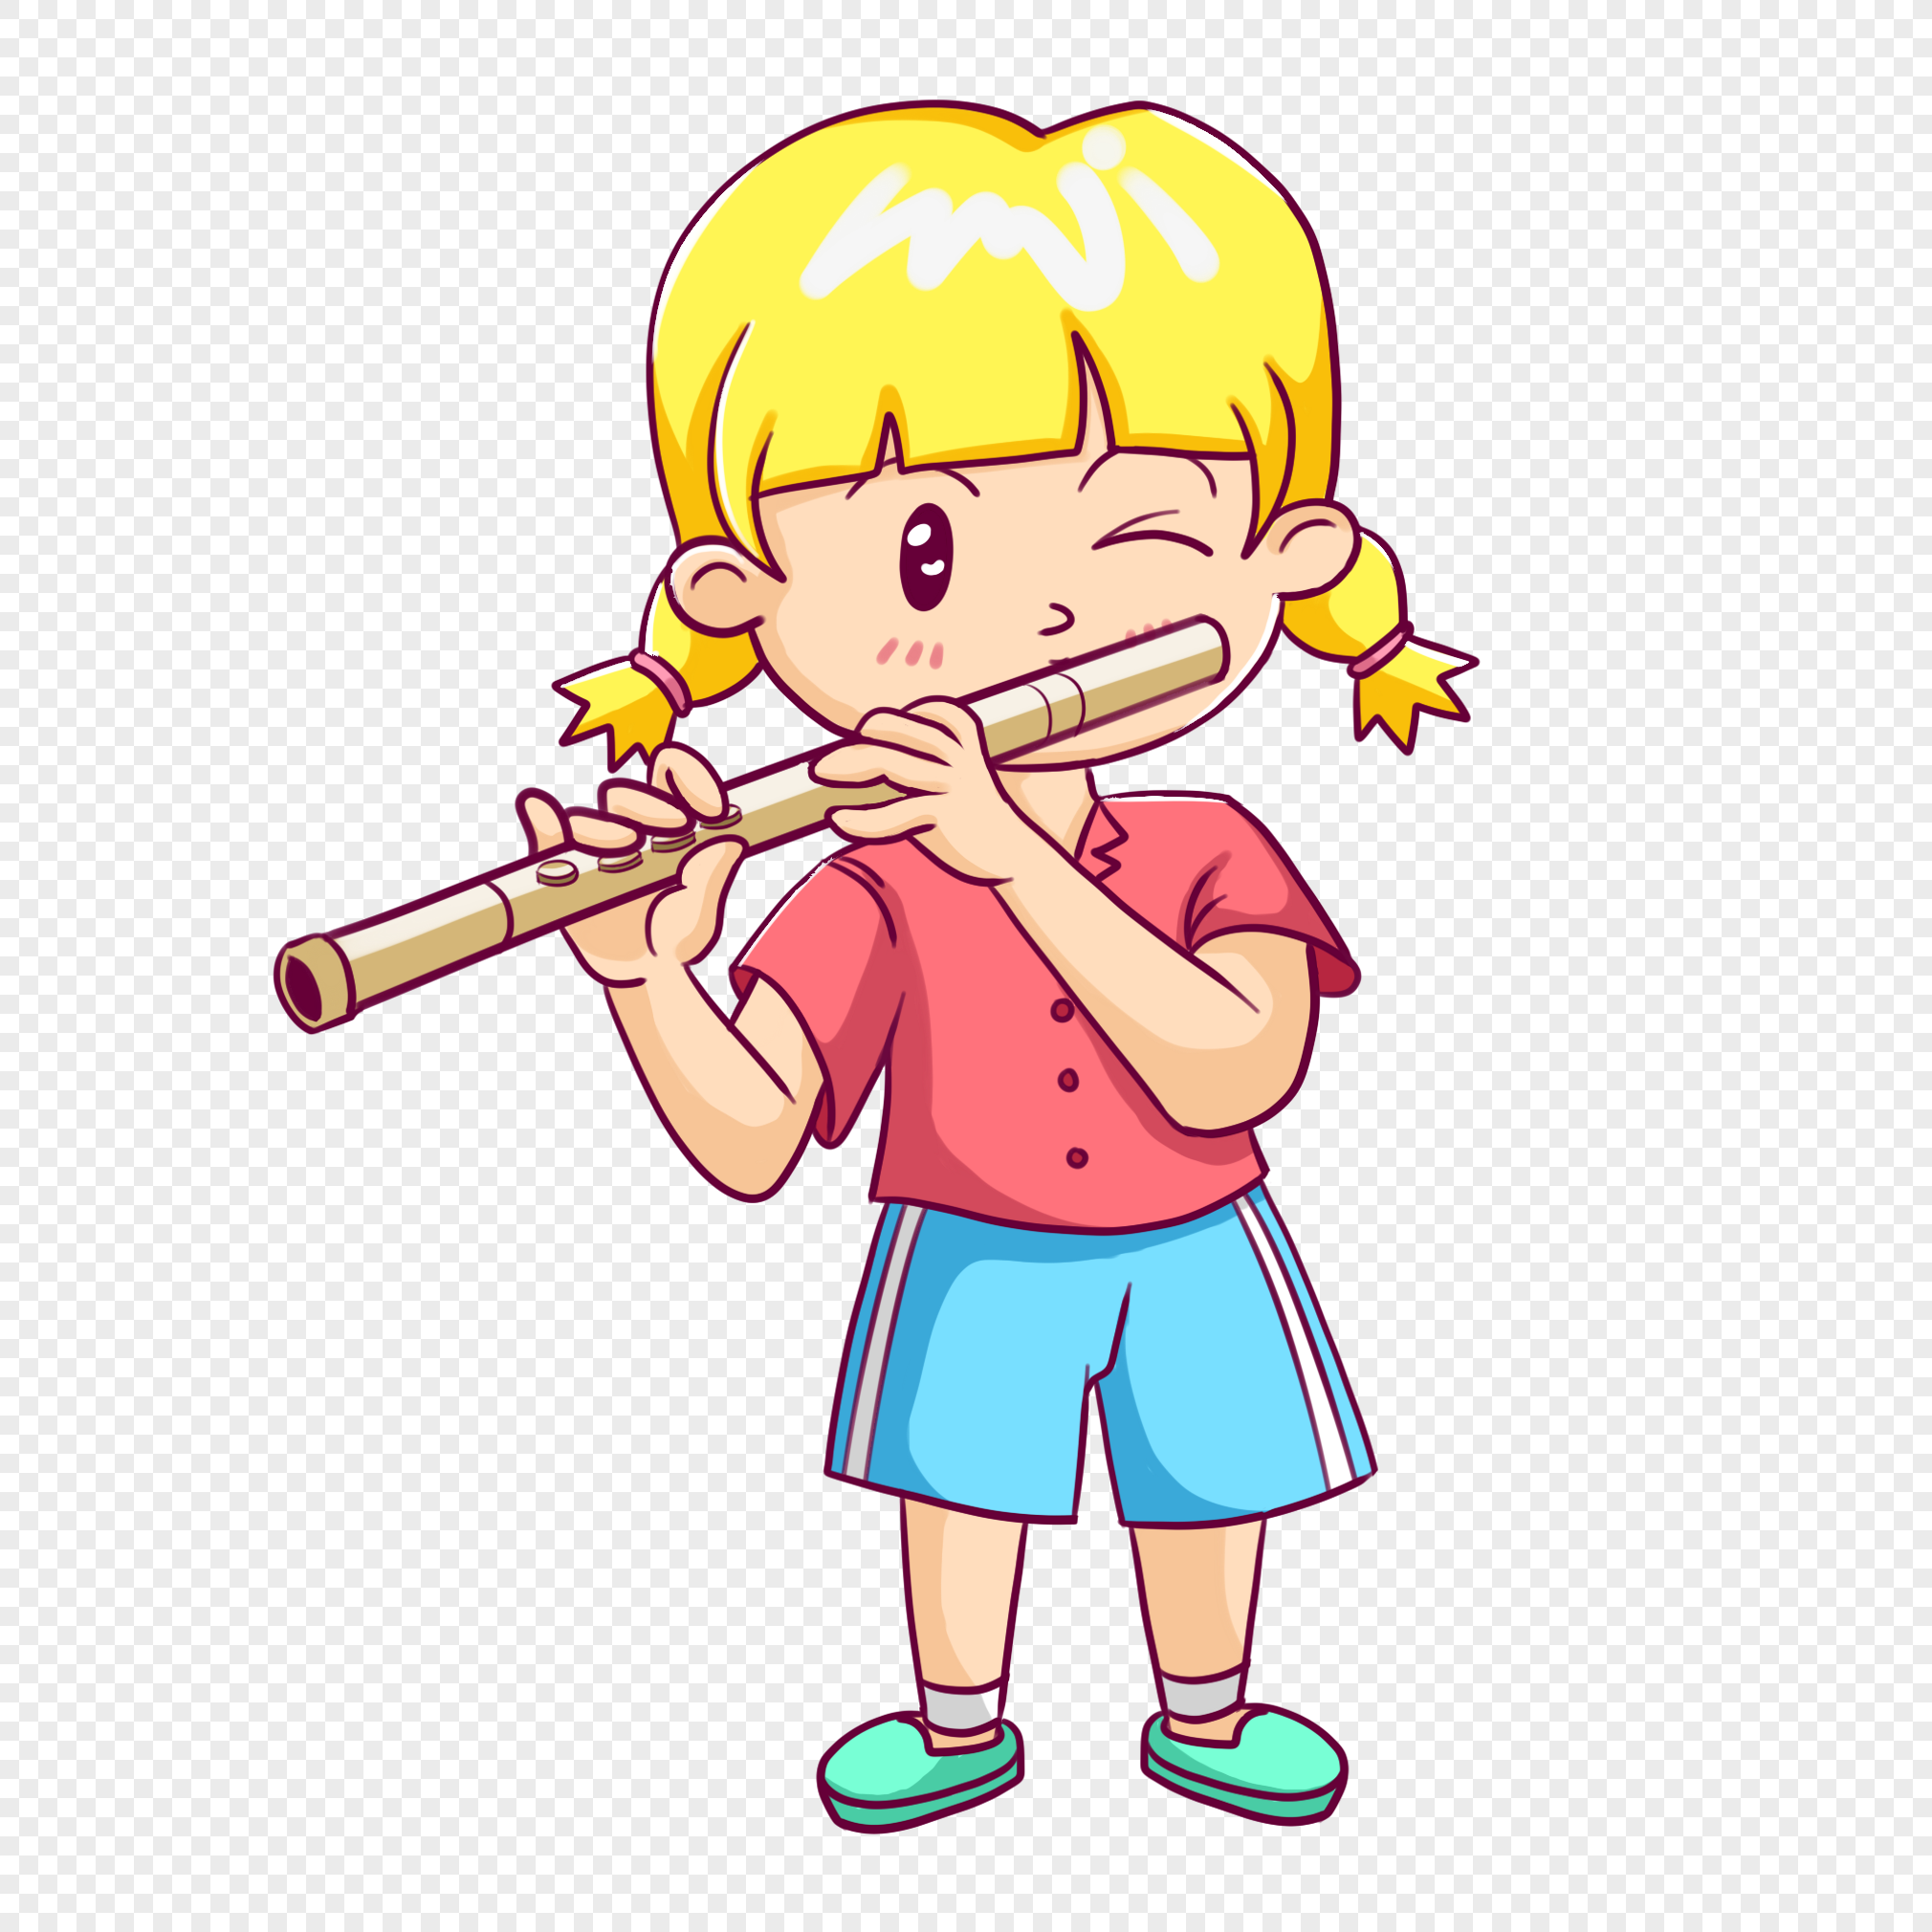 flute player clip art